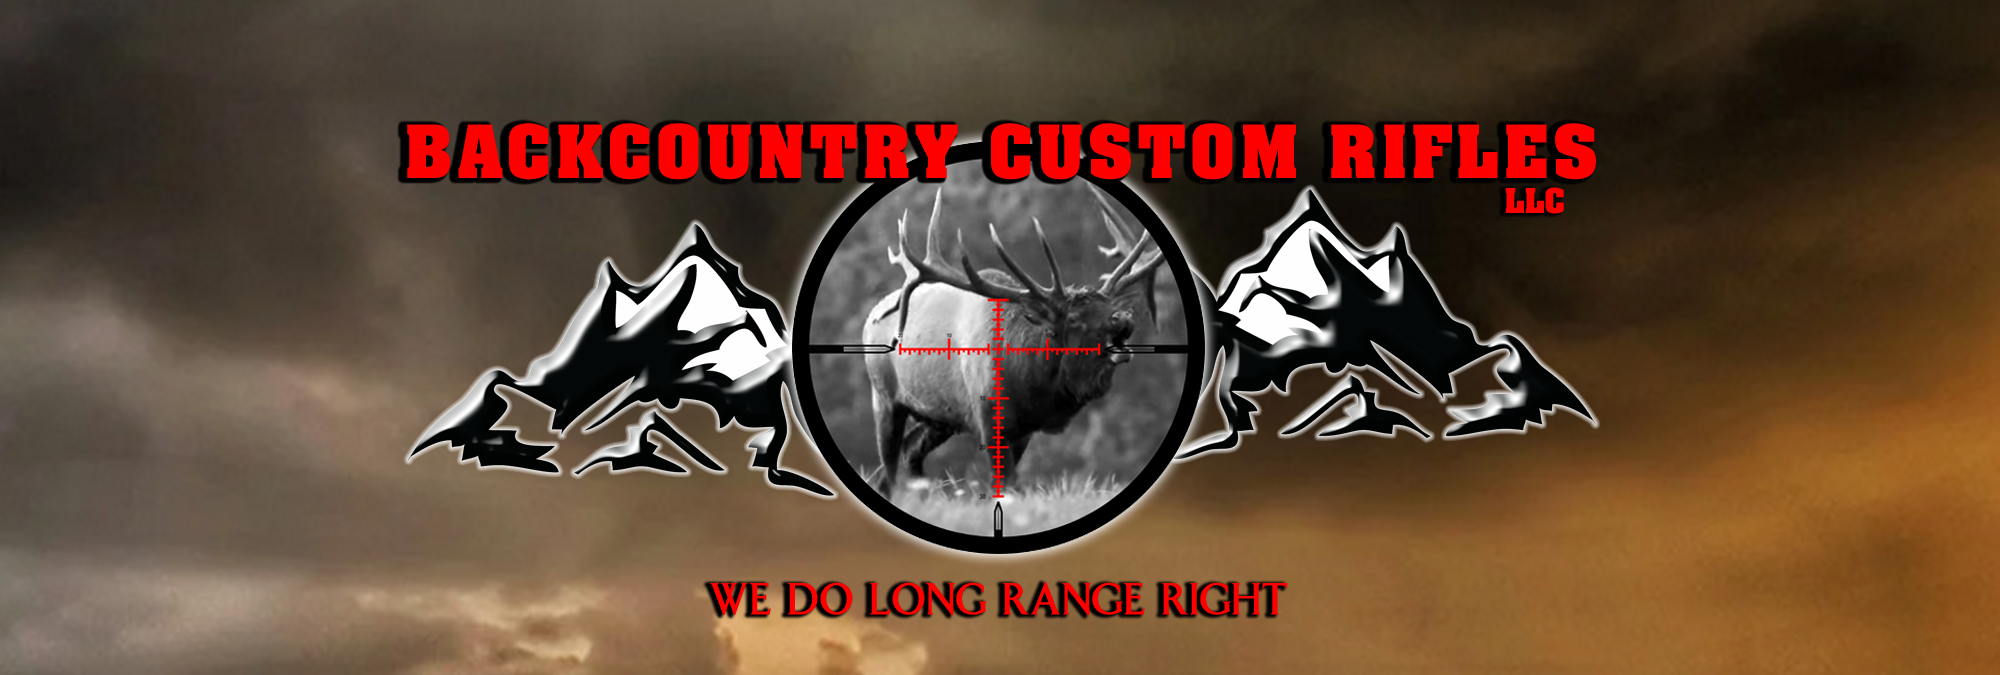 https://backcountrycustomrifles.com/wp-content/uploads/2022/08/Backcountry-Custom-Rifles-4-30Aug2022-2000x675.png